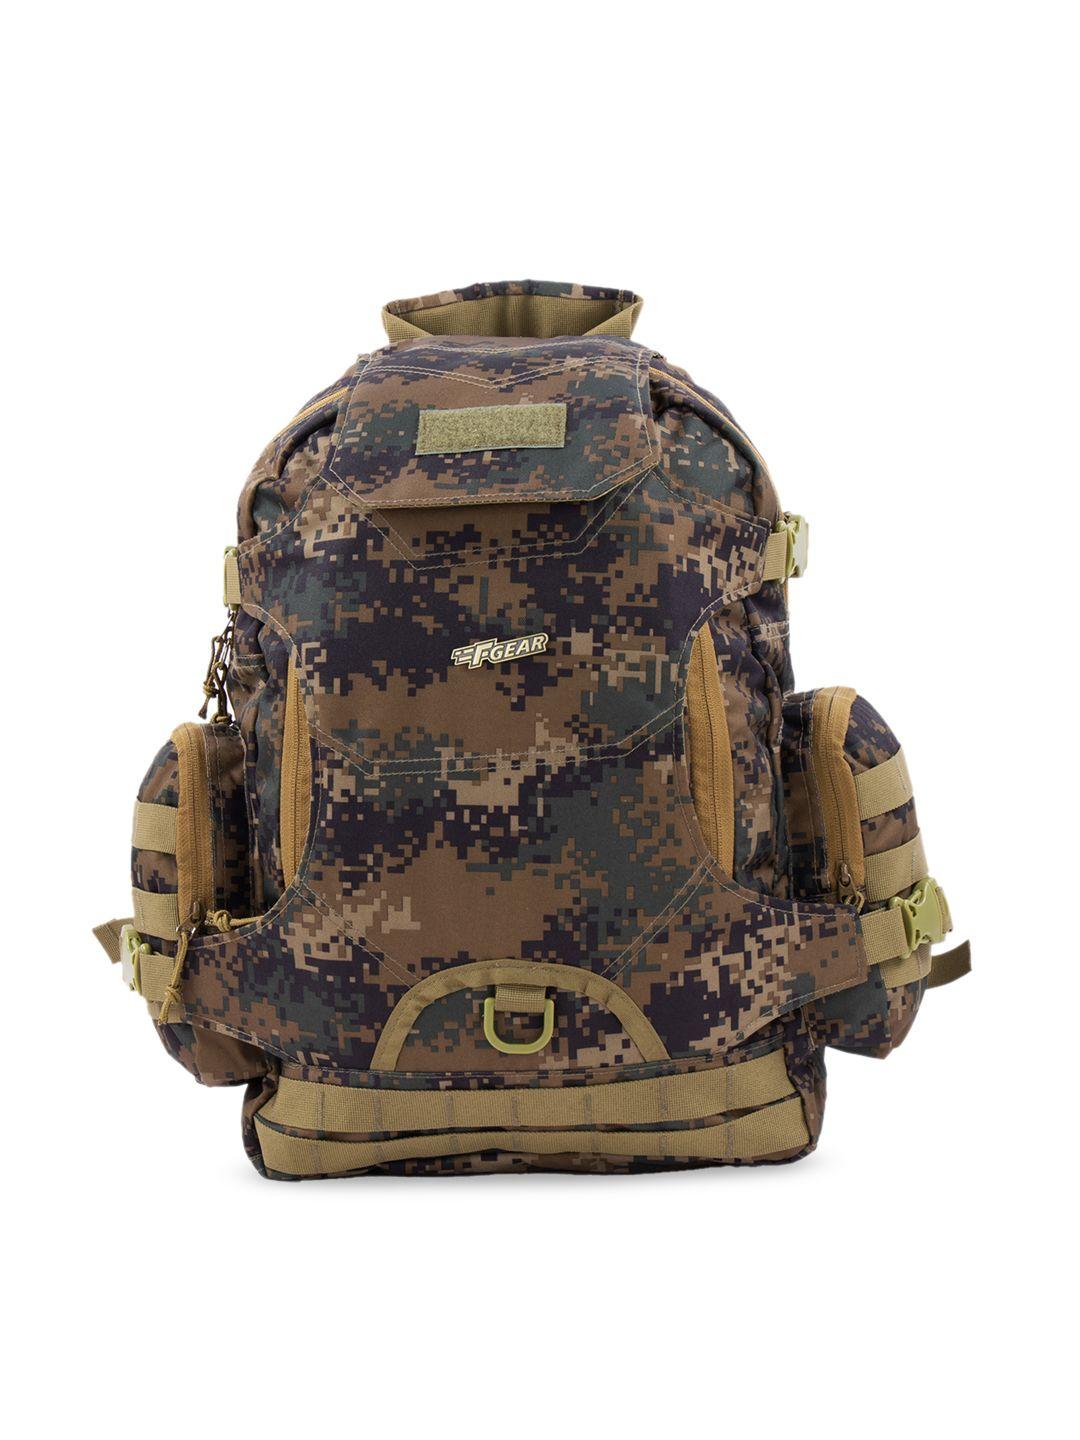 f gear unisex green graphic military ambush marpat wl digital camo backpack